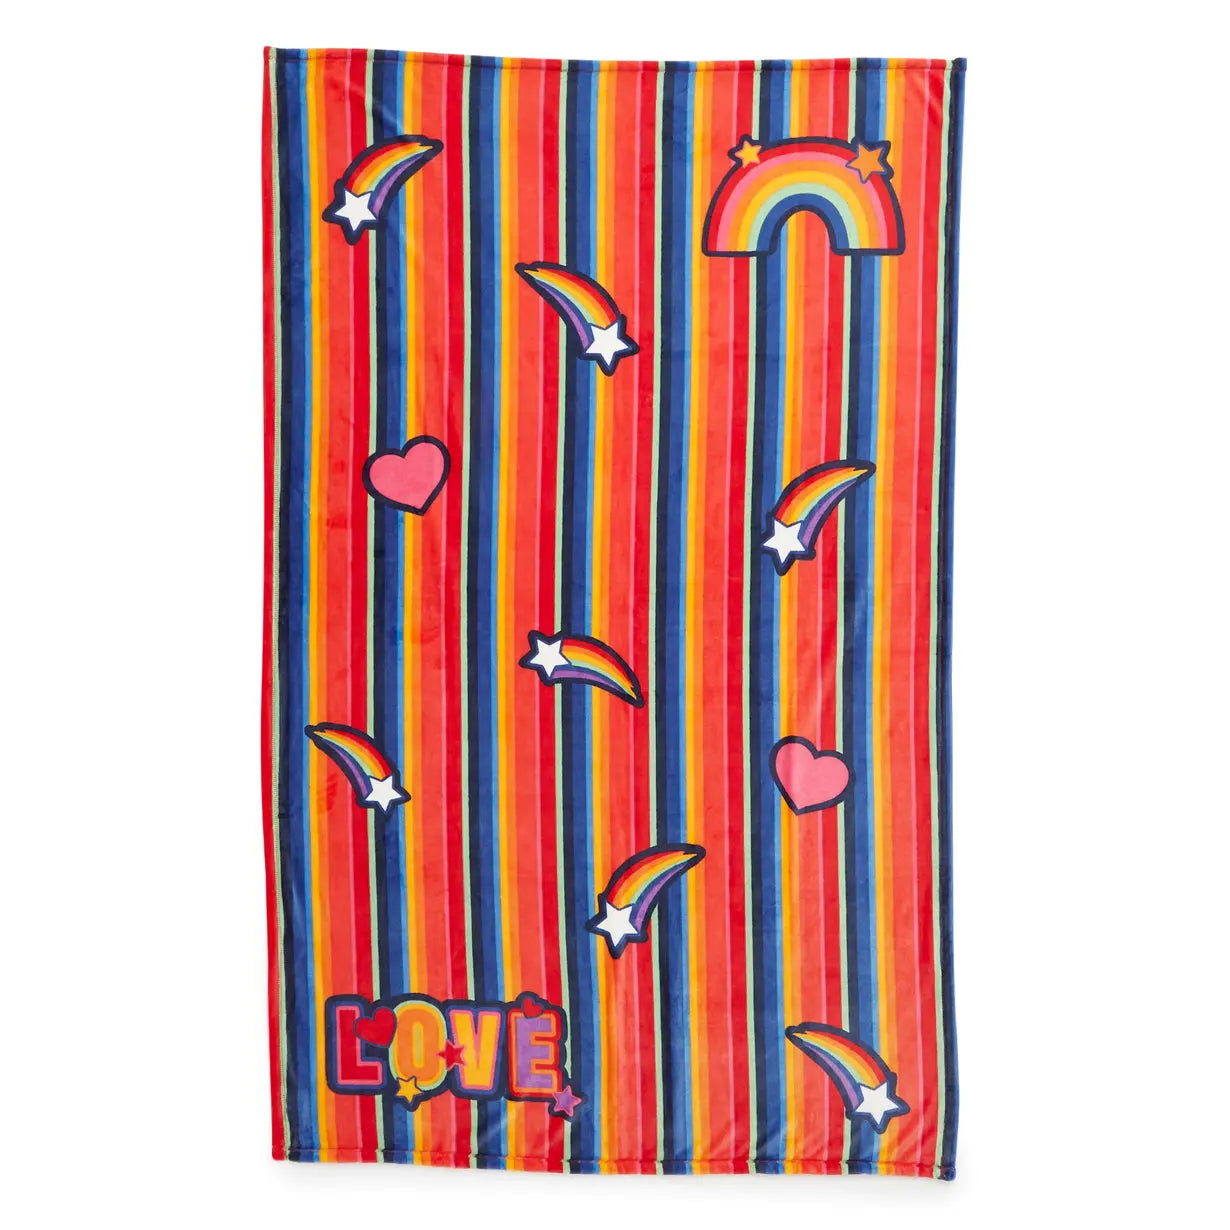 A Vera Bradley Plush Throw Blanket designed in their Pride Love Stripe pattern. With a rainbow design.